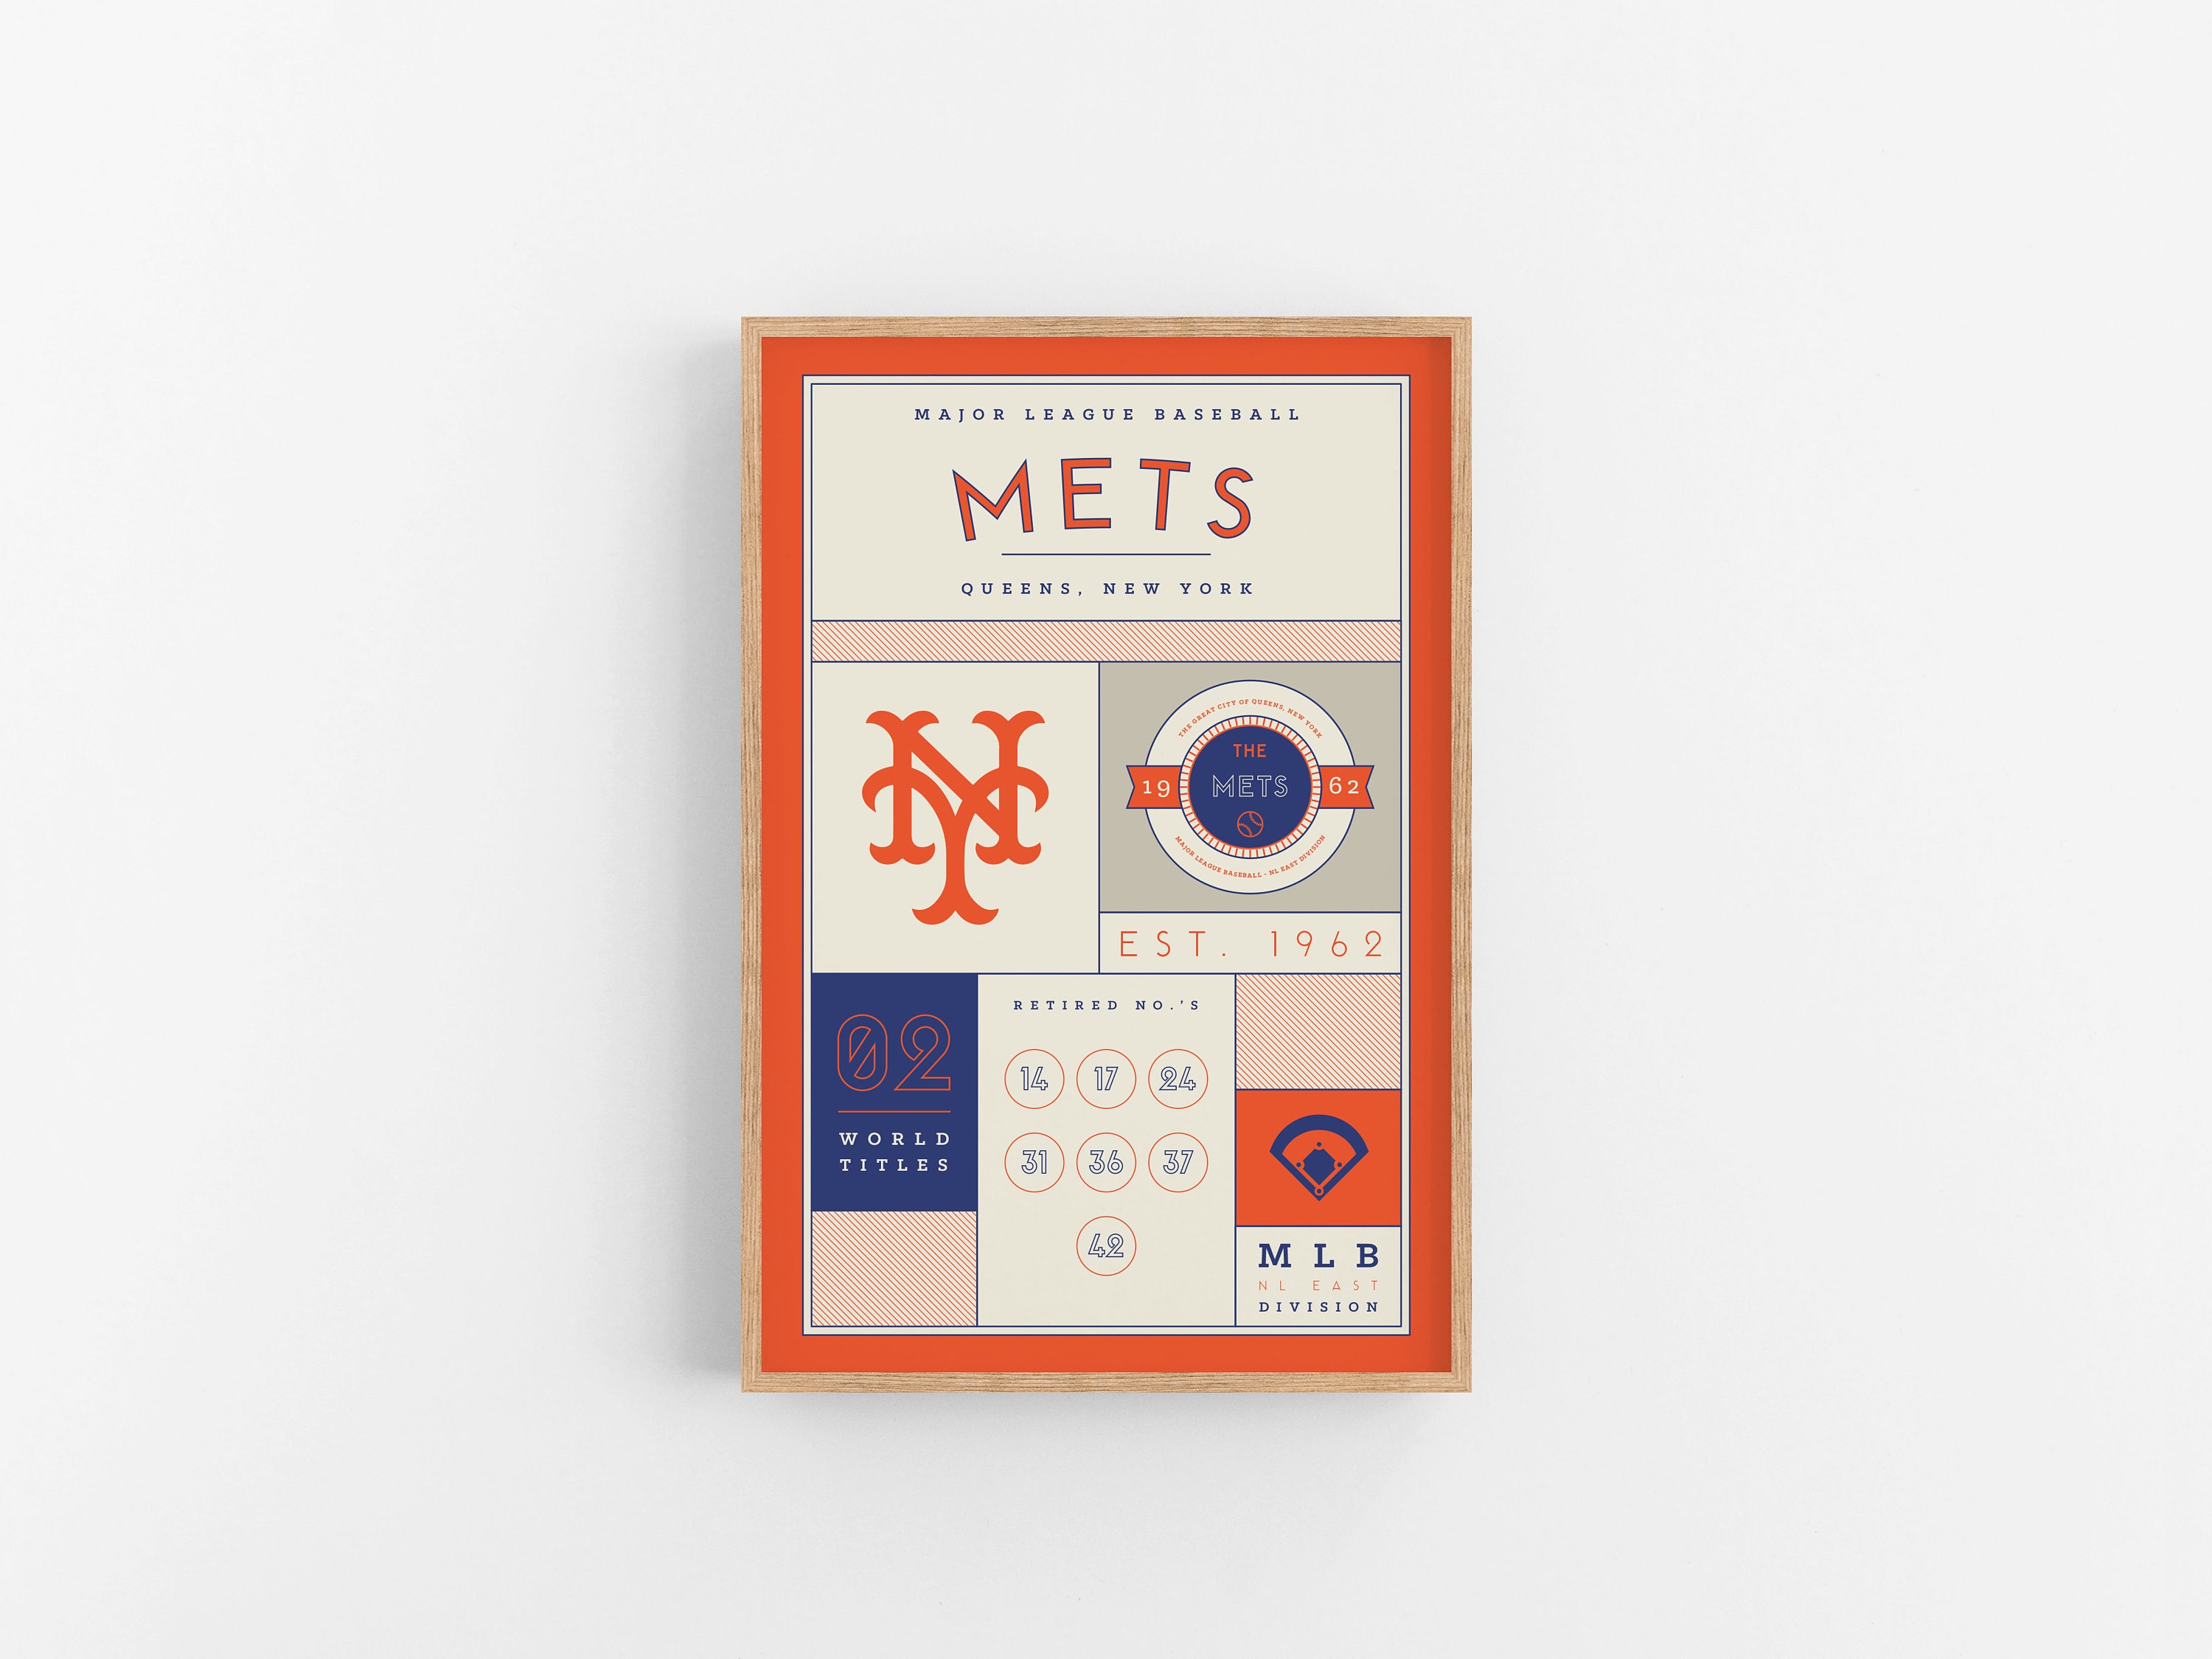 19 New York Mets Themes ideas